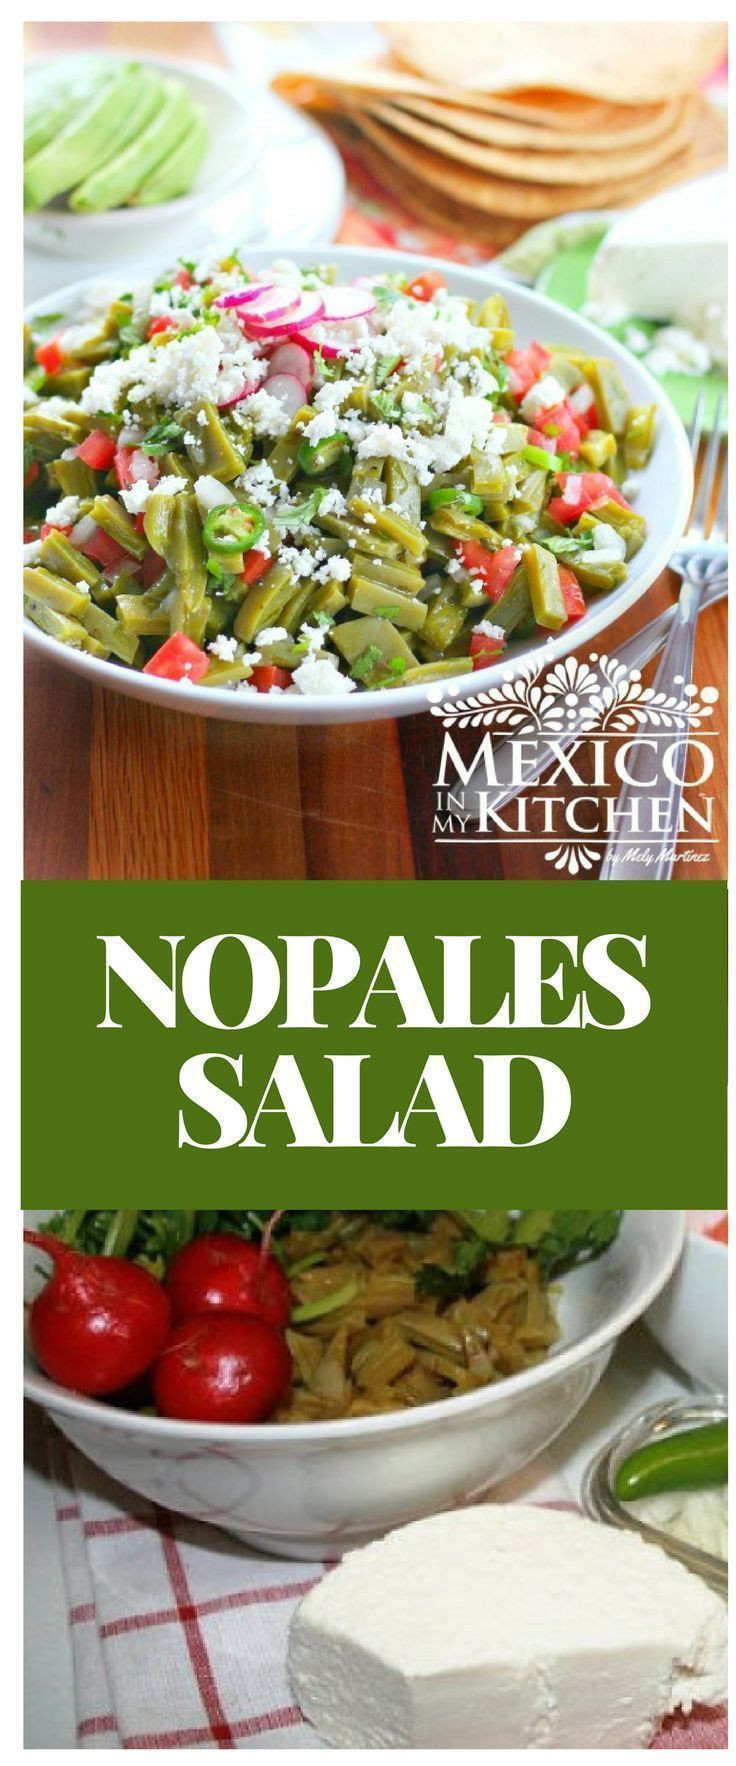 Nopales Recipes Mexican Keto
 How to Cook Nopales